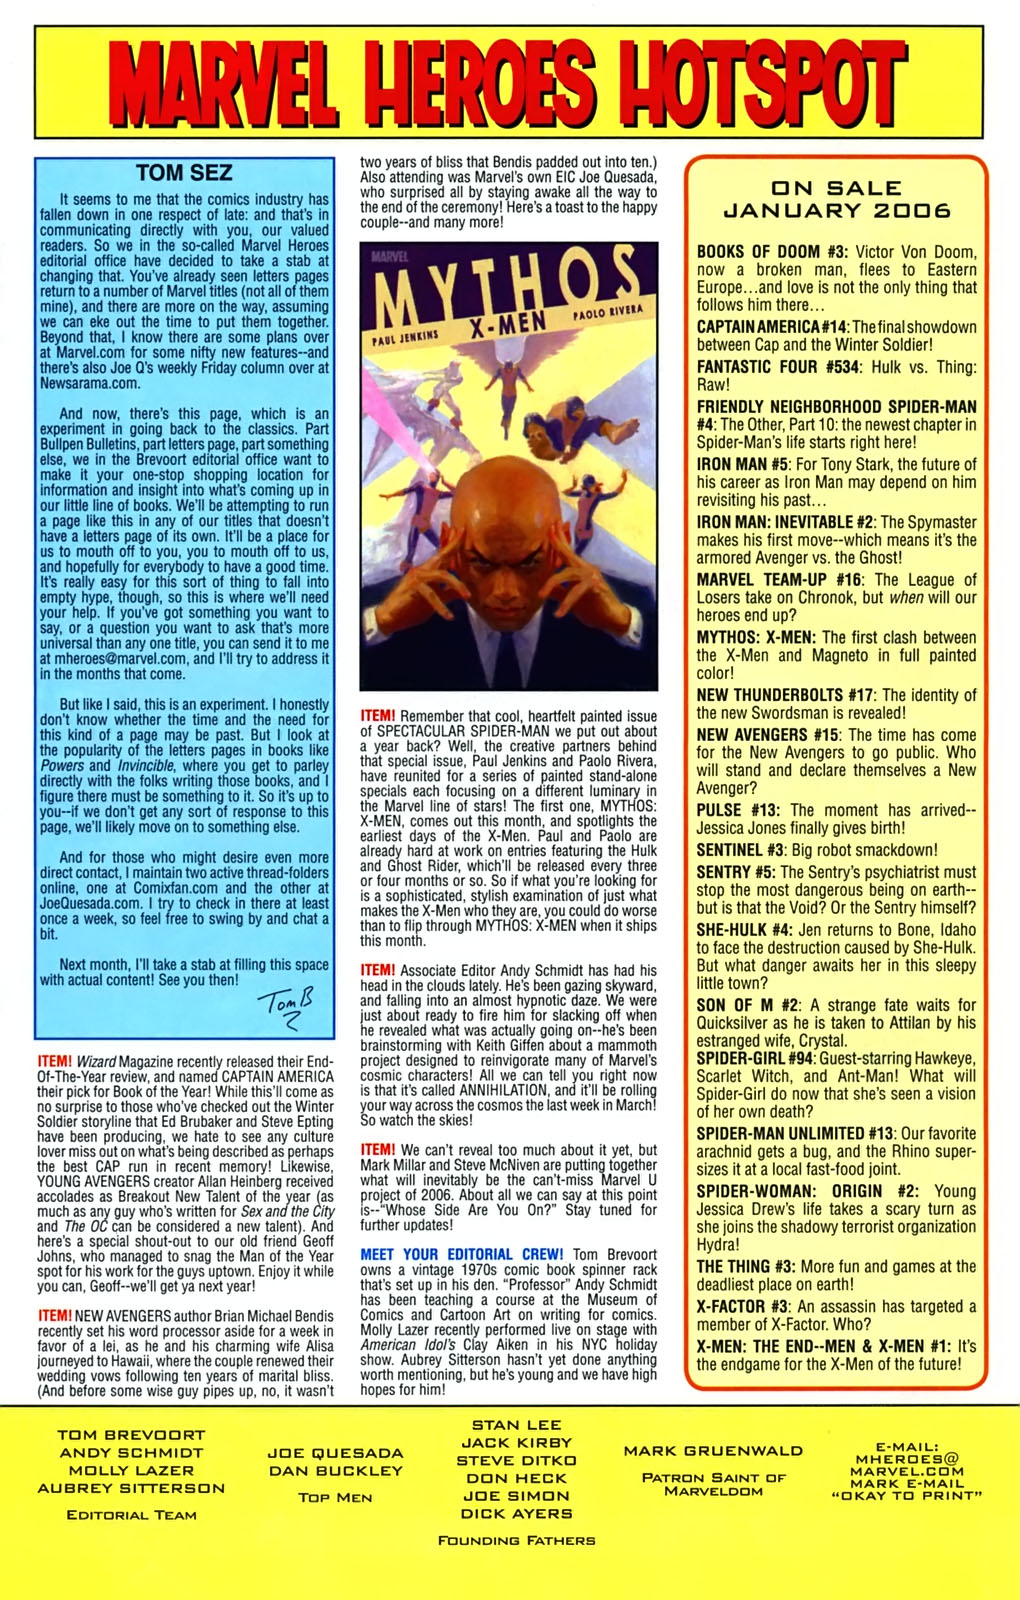 Read online Iron Man: Inevitable comic -  Issue #2 - 20